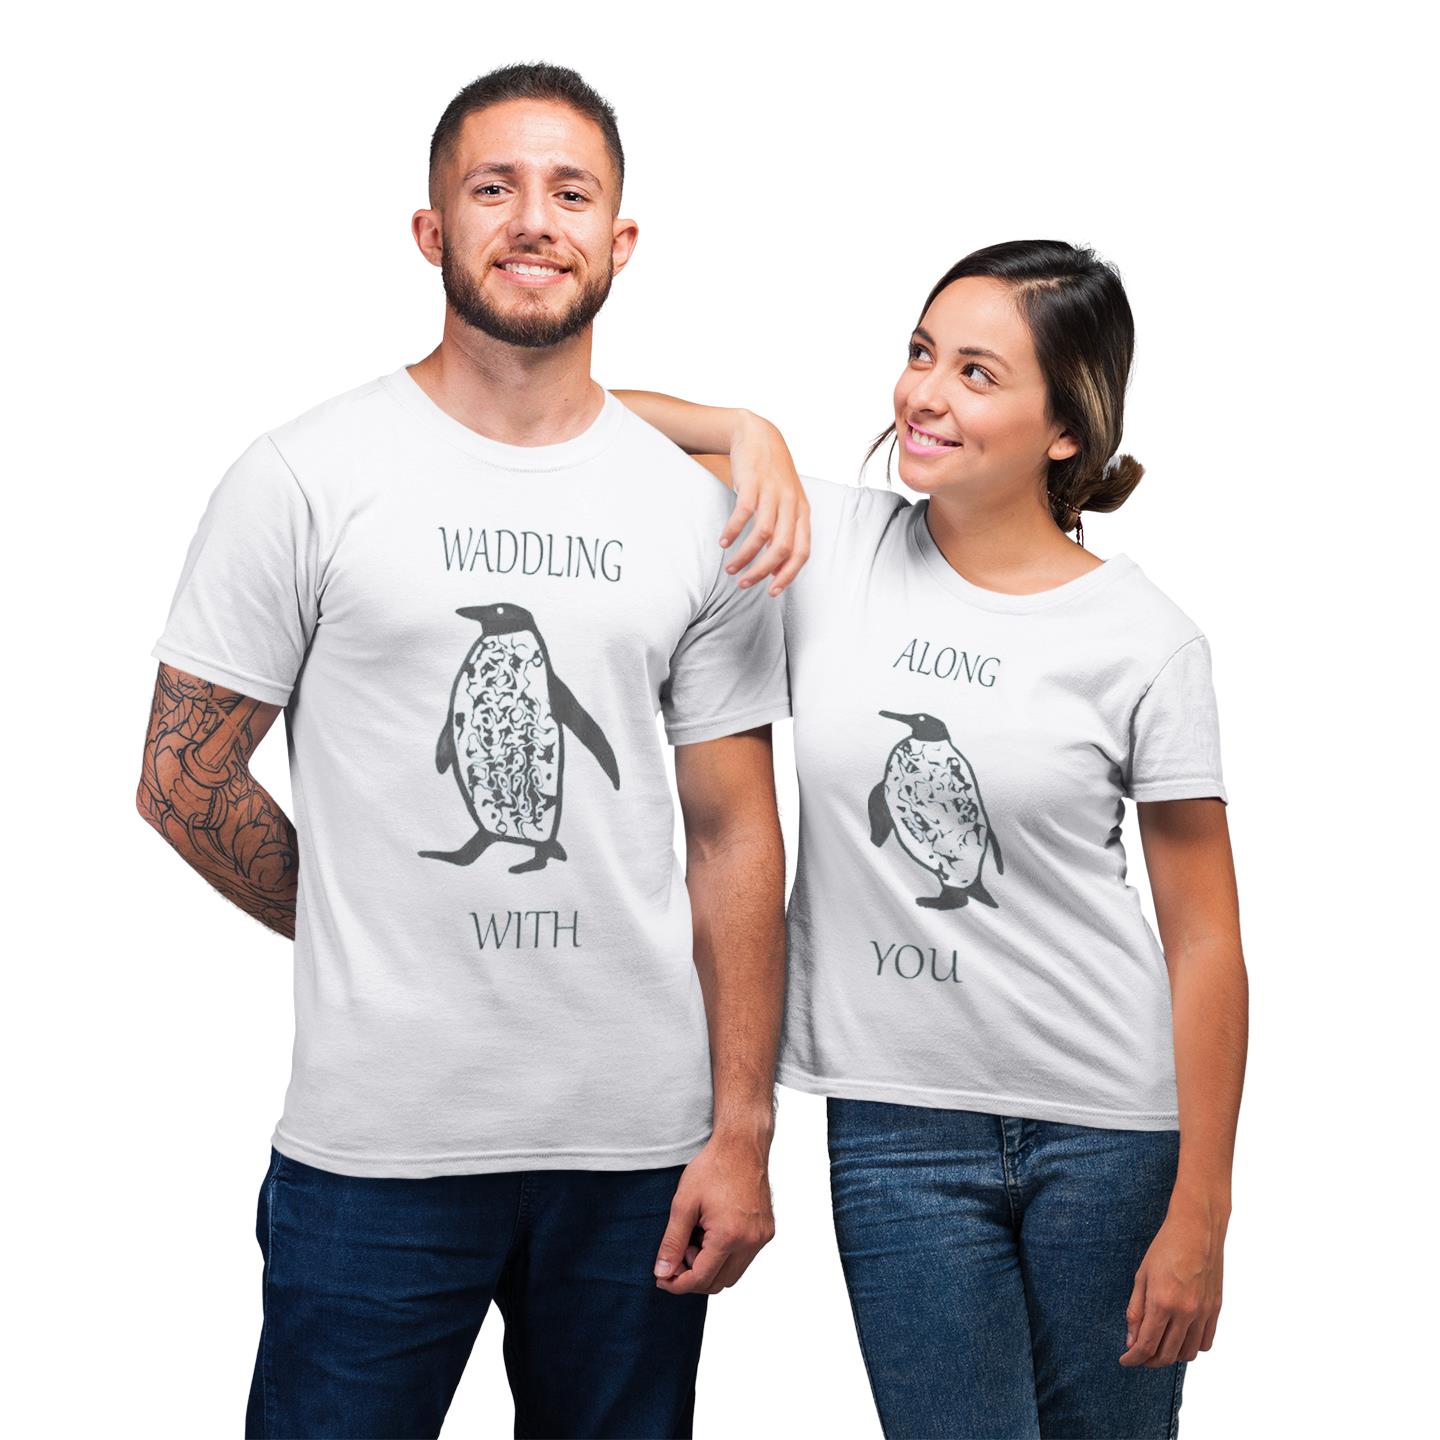 Wadding Along With You Matching Couple Gift T-shirt